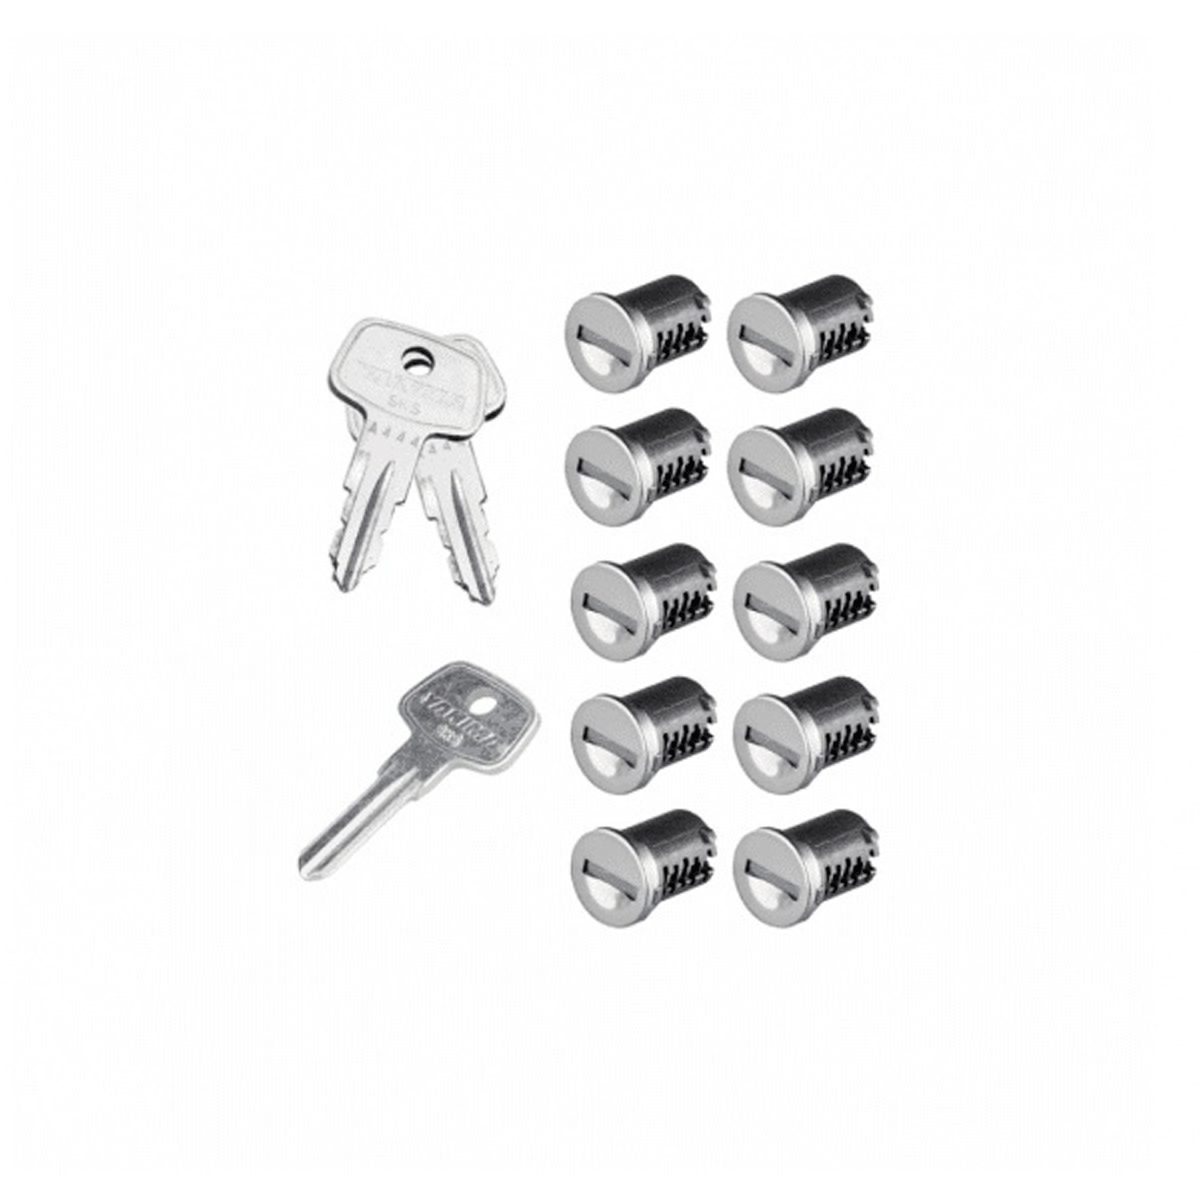 К-т ключей с личинками Yakima SKS Lock Pack - 10 Cores (YK 8007210)